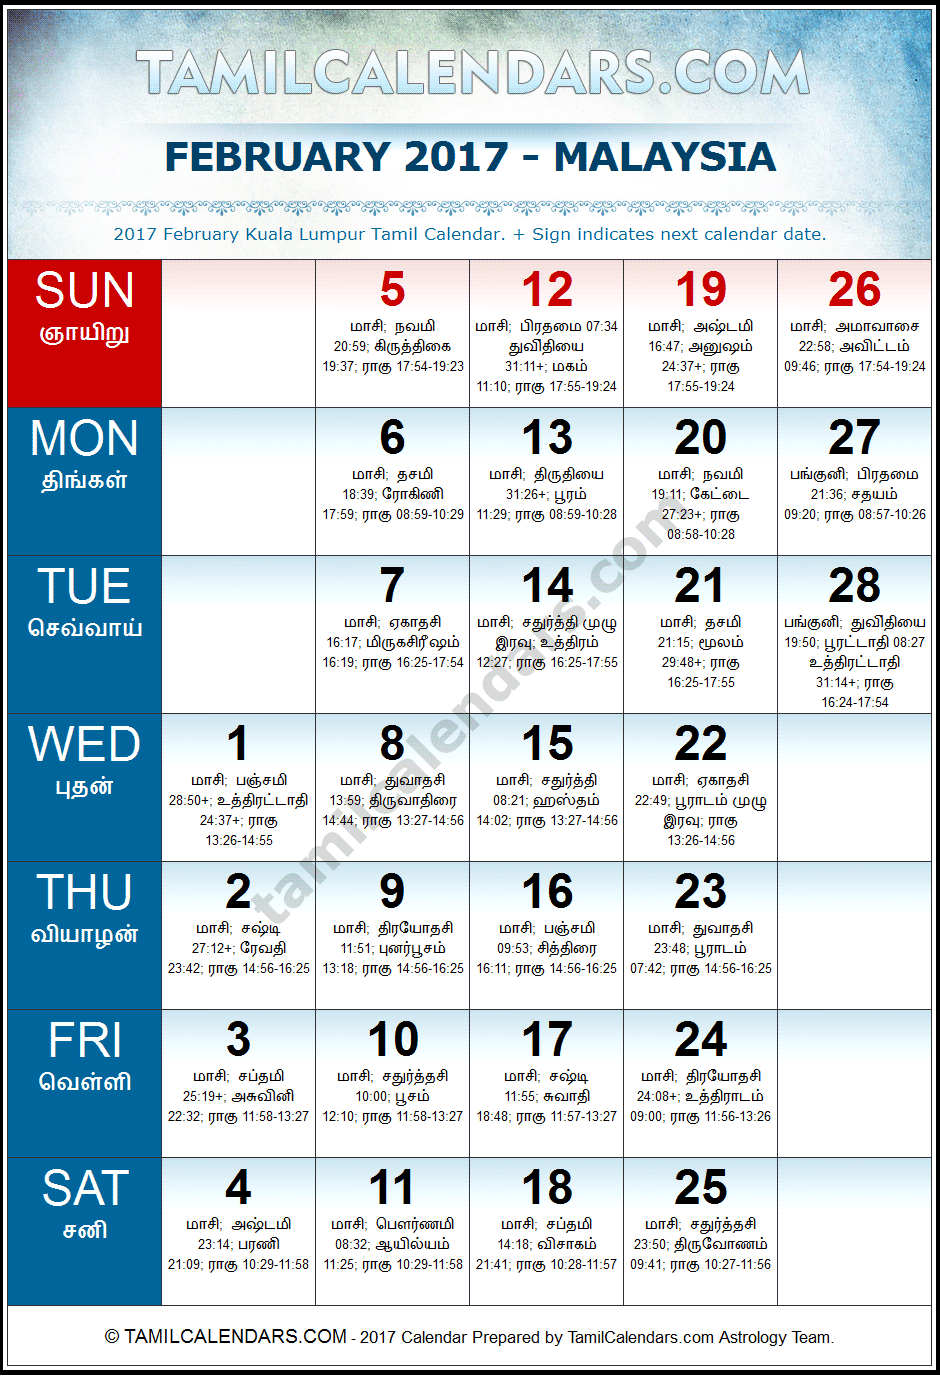 February 2017 Tamil Calendar for Malaysia (Kuala Lumpur)